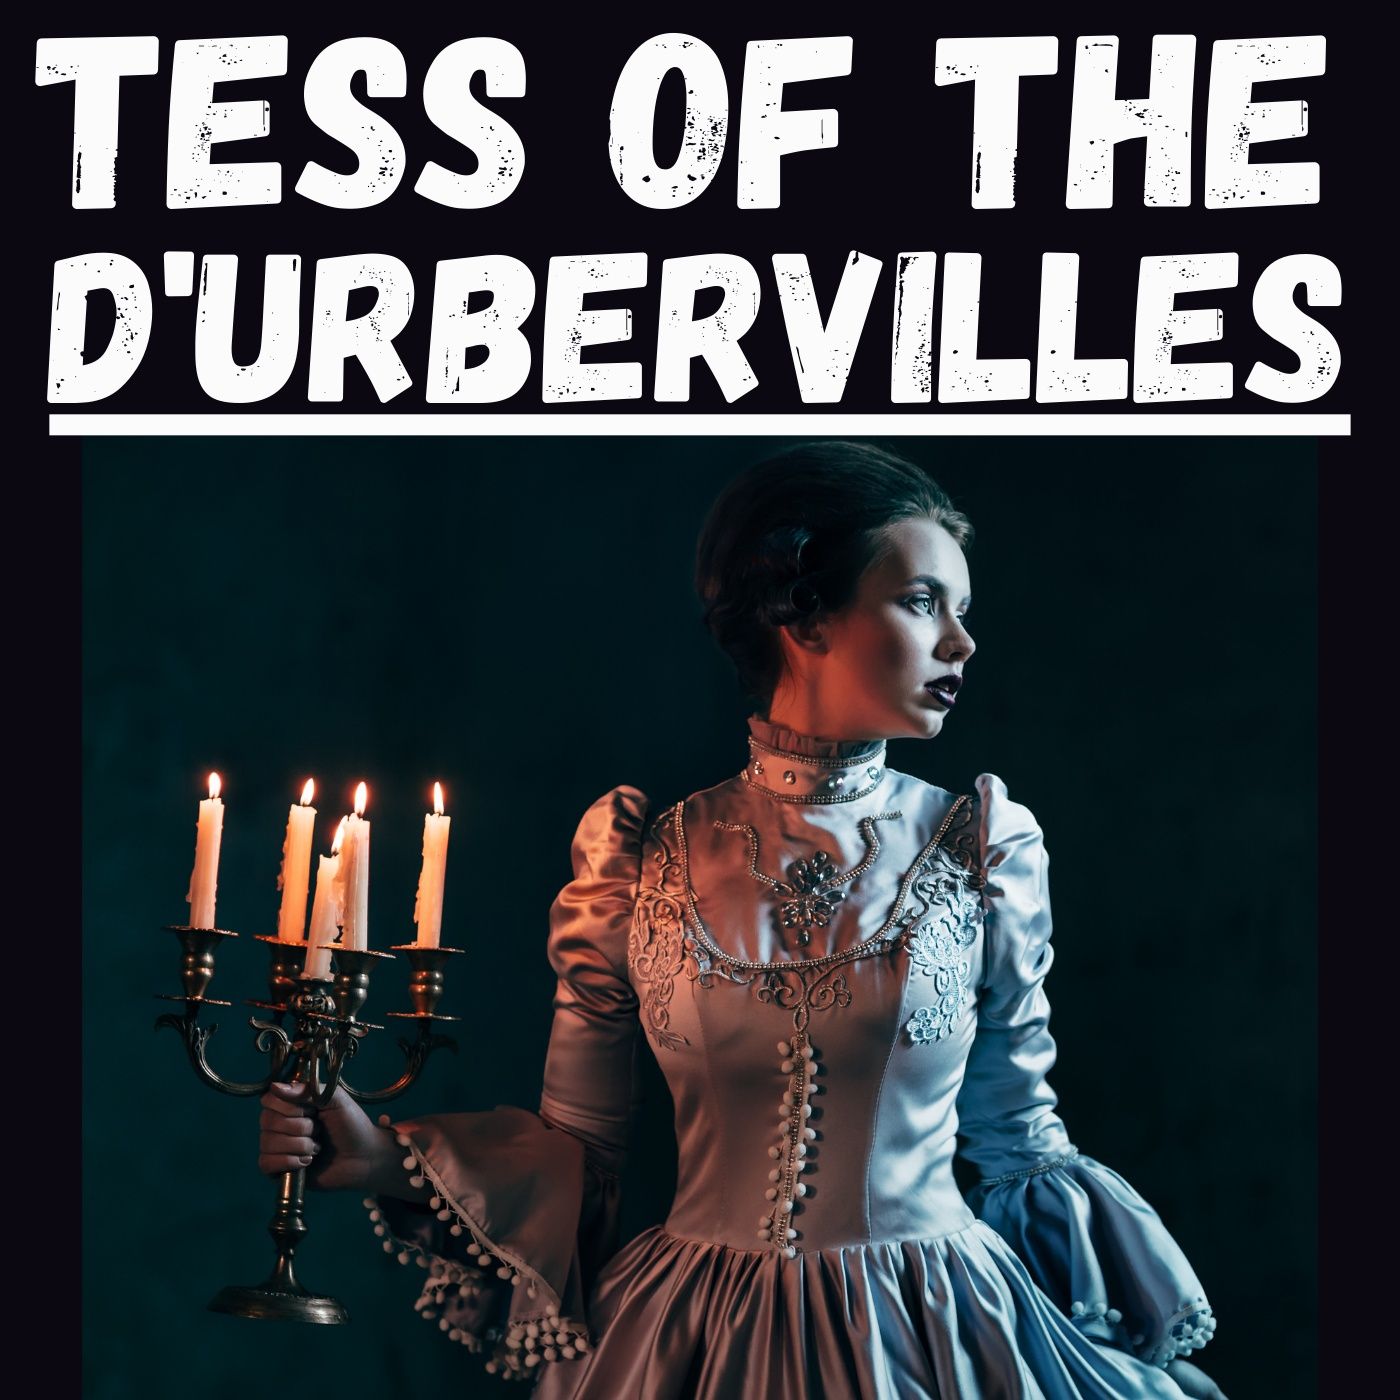 Tess of The d’Ubervilles – Thomas Hardy